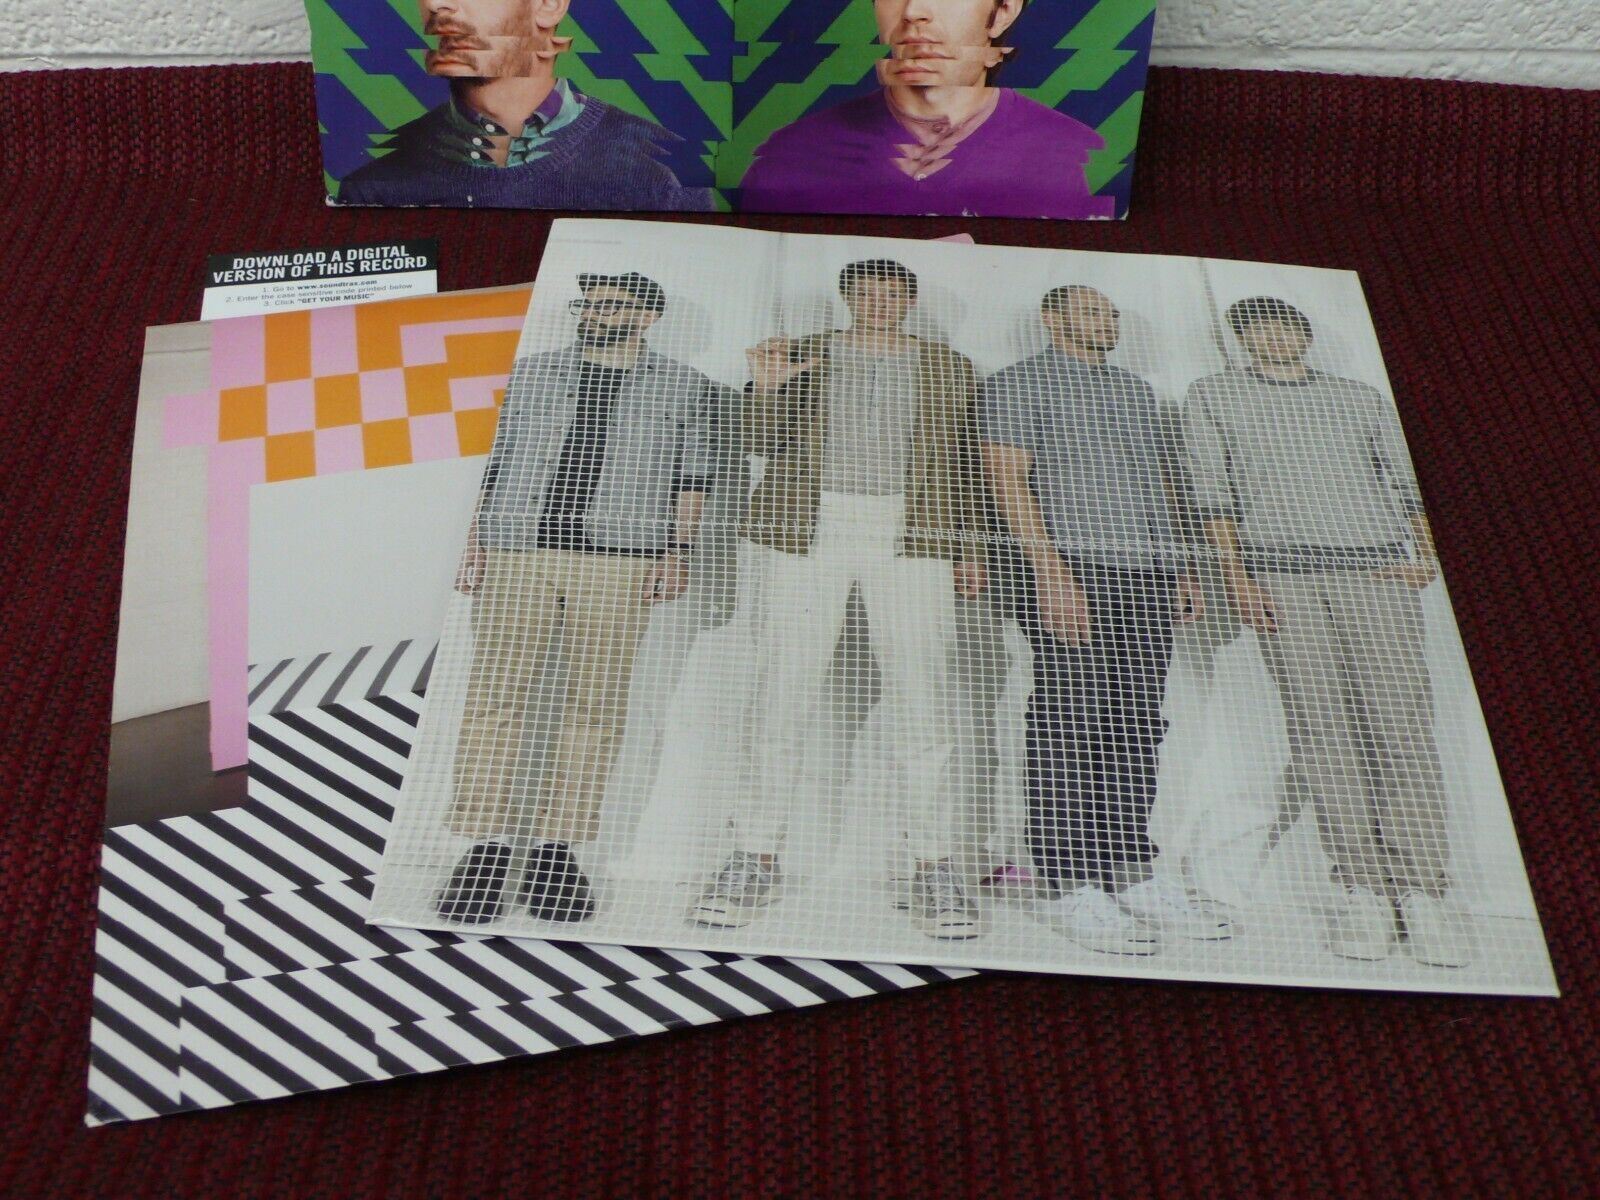 Ok Go: Ok Go: : CDs y vinilos}